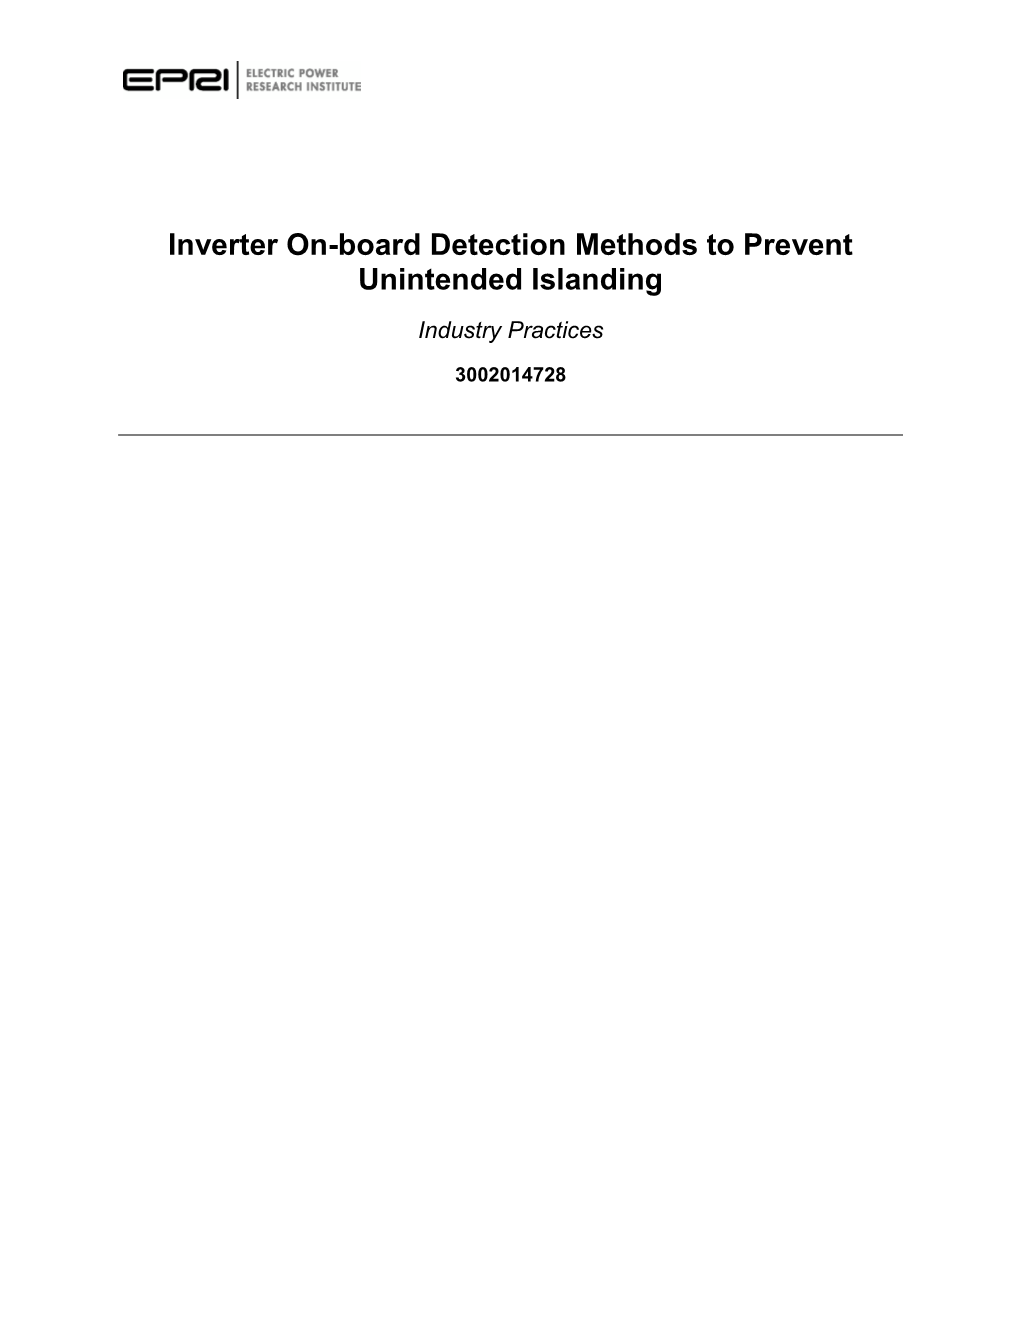 Inverter On-Board Detection Methods to Prevent Unintended Islanding Industry Practices